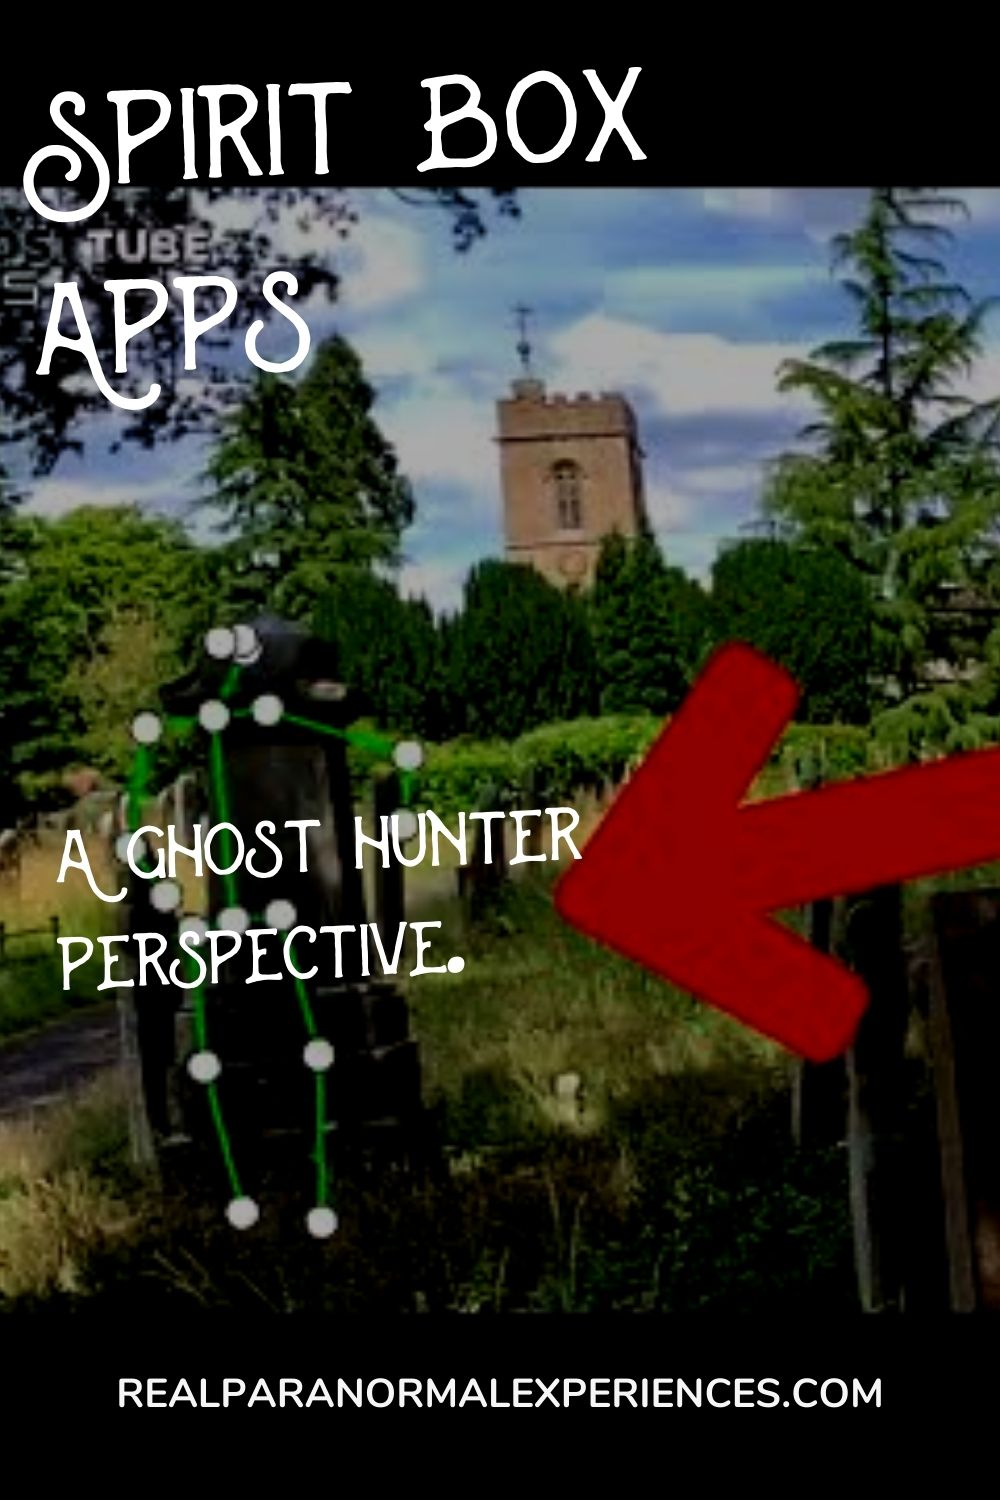 Spirit Box Apps (Phone EVP) Real Paranormal Investigators Advice